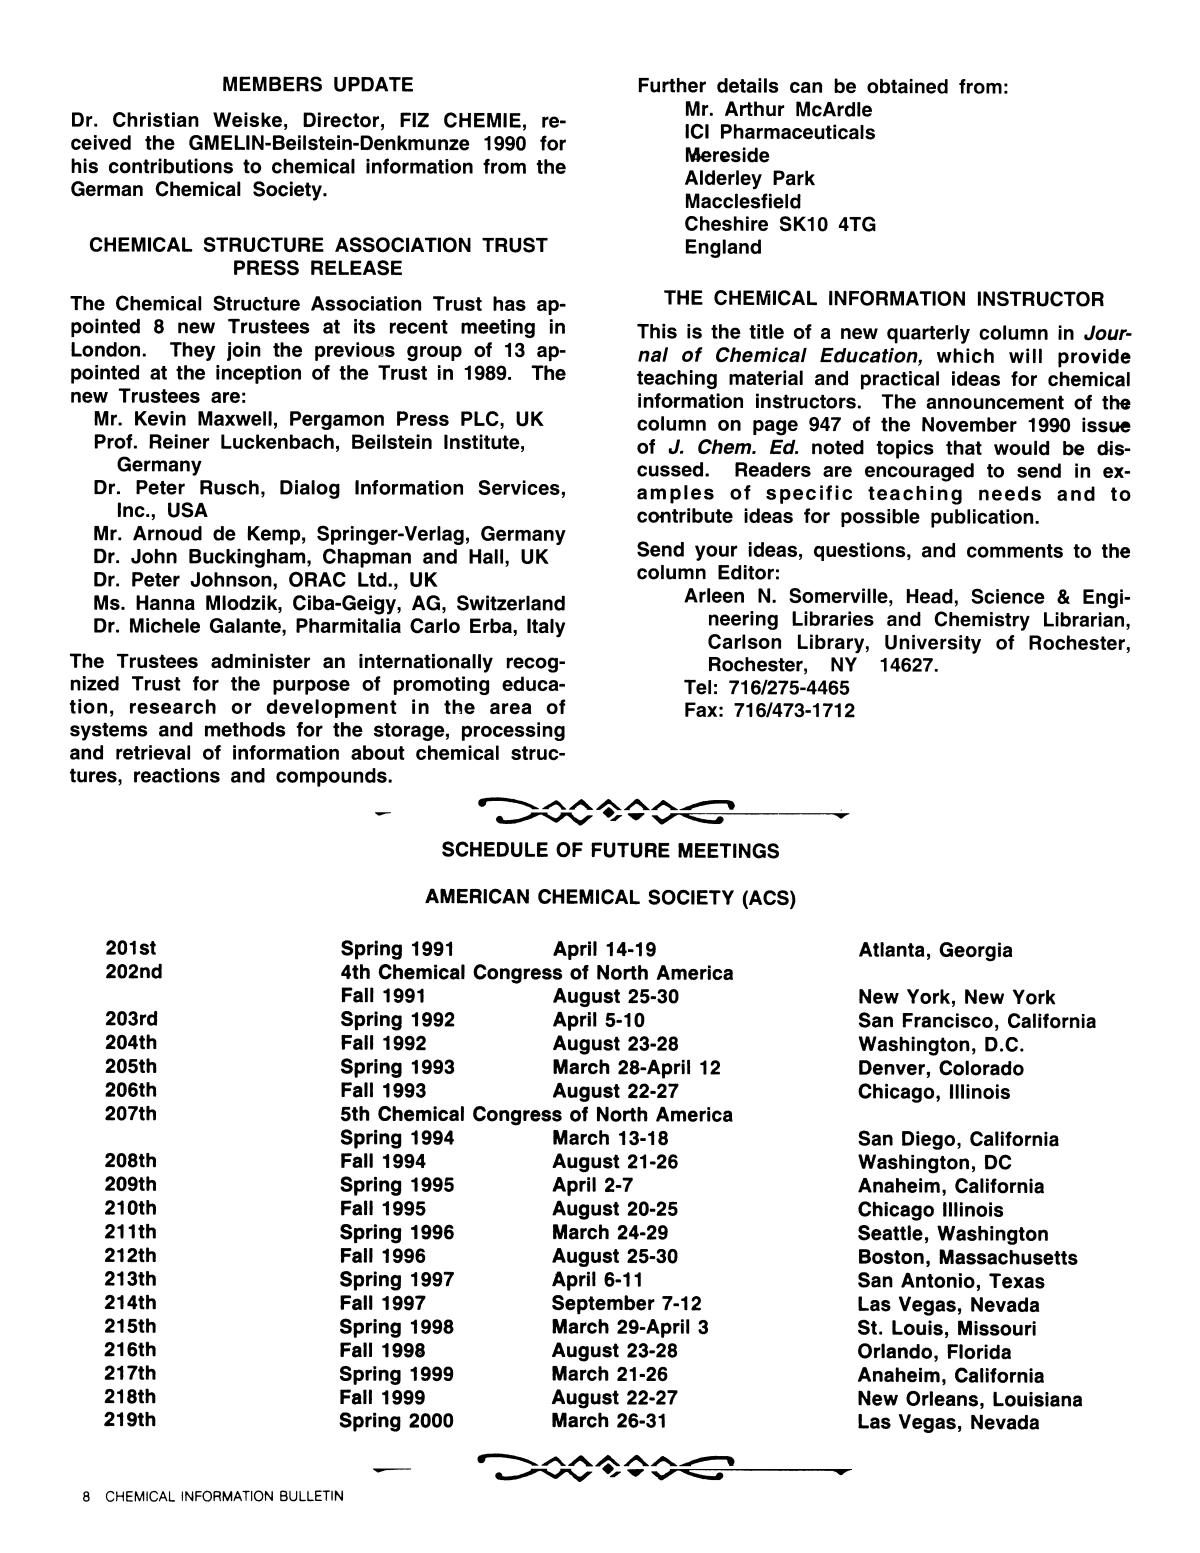 Chemical Information Bulletin, Volume 43, Number 1, Spring 1991
                                                
                                                    8
                                                